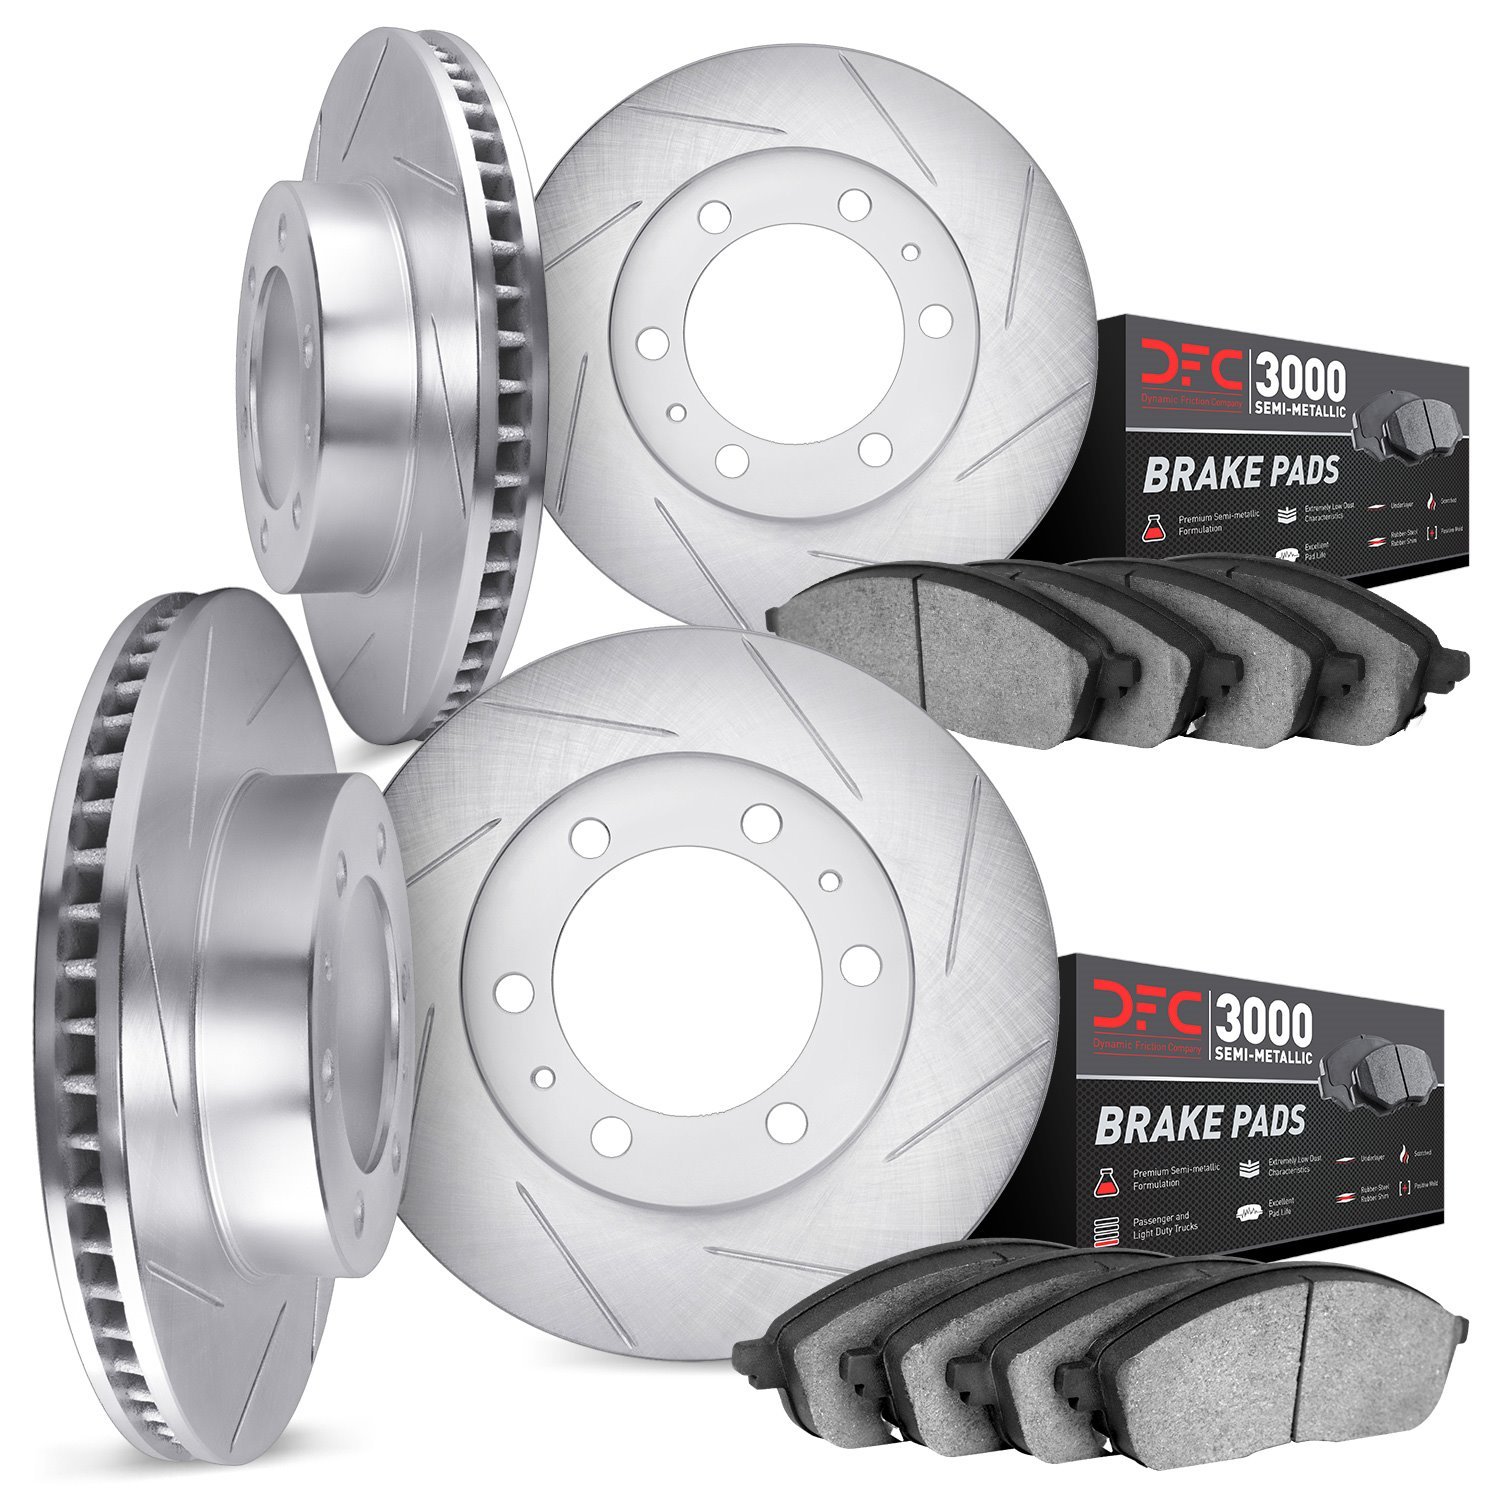 5114-48020 Slotted Brake Rotors with 3000-Series Semi-Metallic Brake Pads Kit & Hardware [Silver], 2000-2006 GM, Position: Front